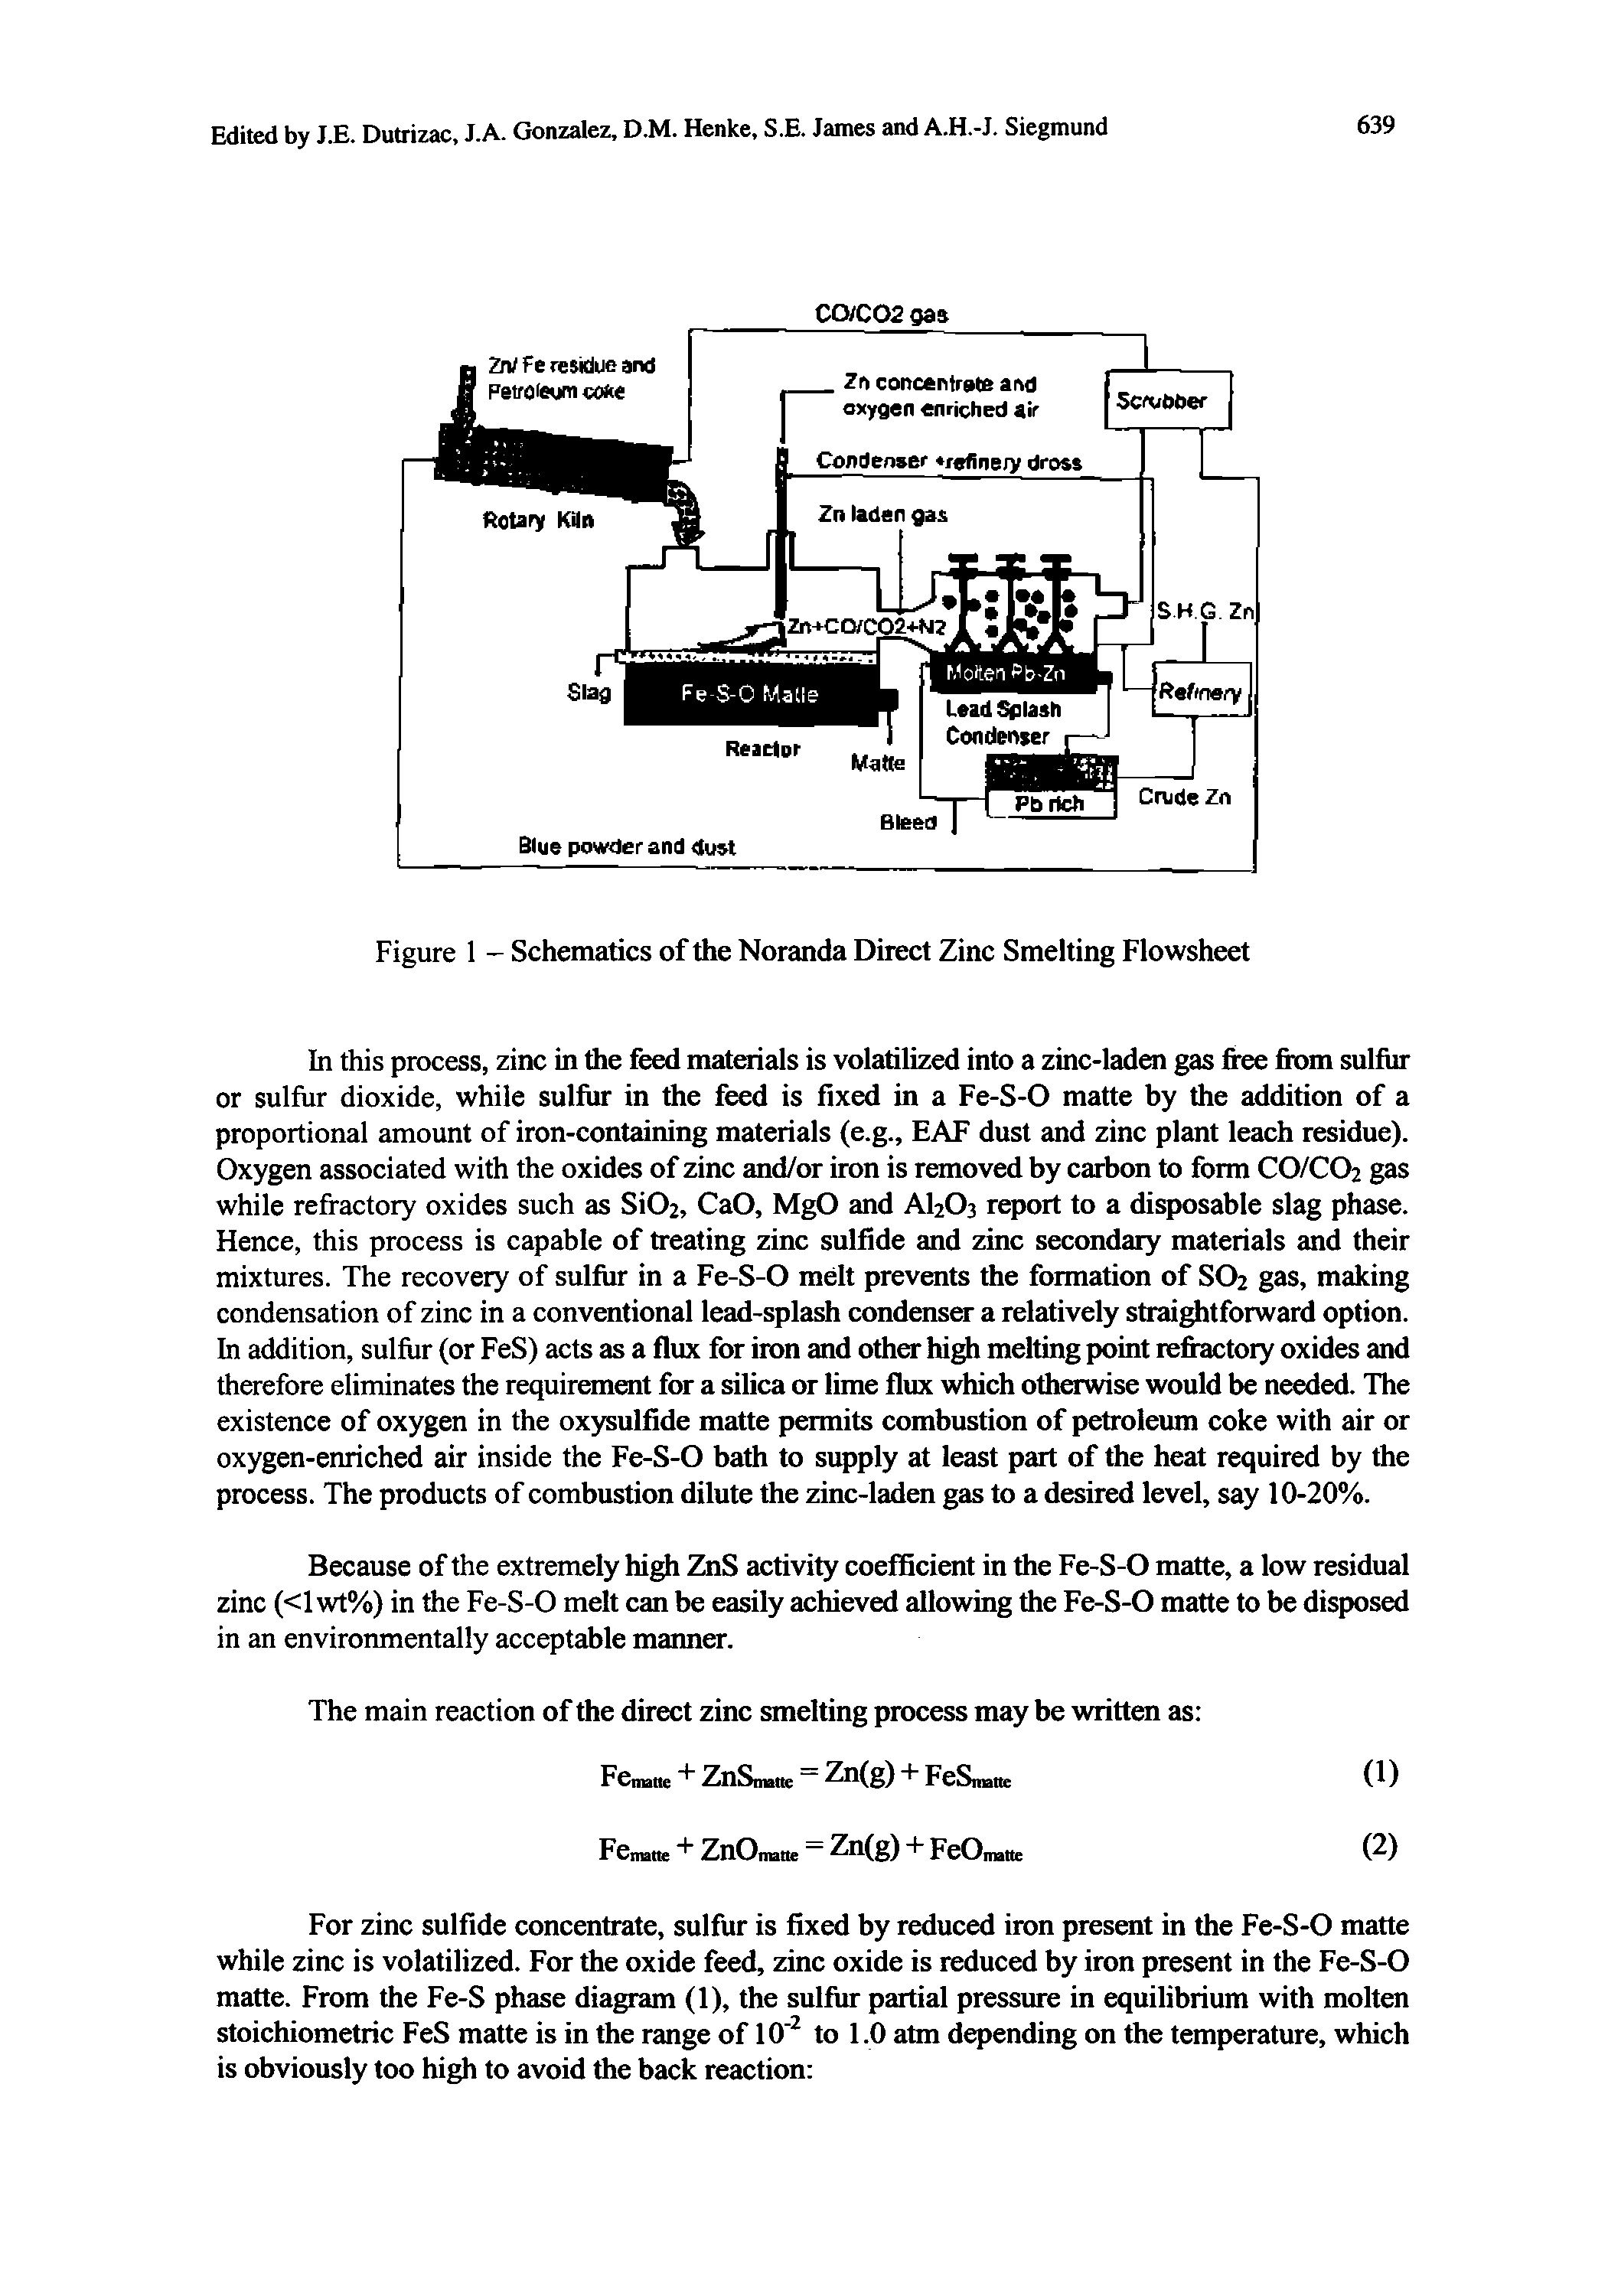 Figure 1 - Schematics of the Noranda Direct Zinc Smelting Flowsheet...